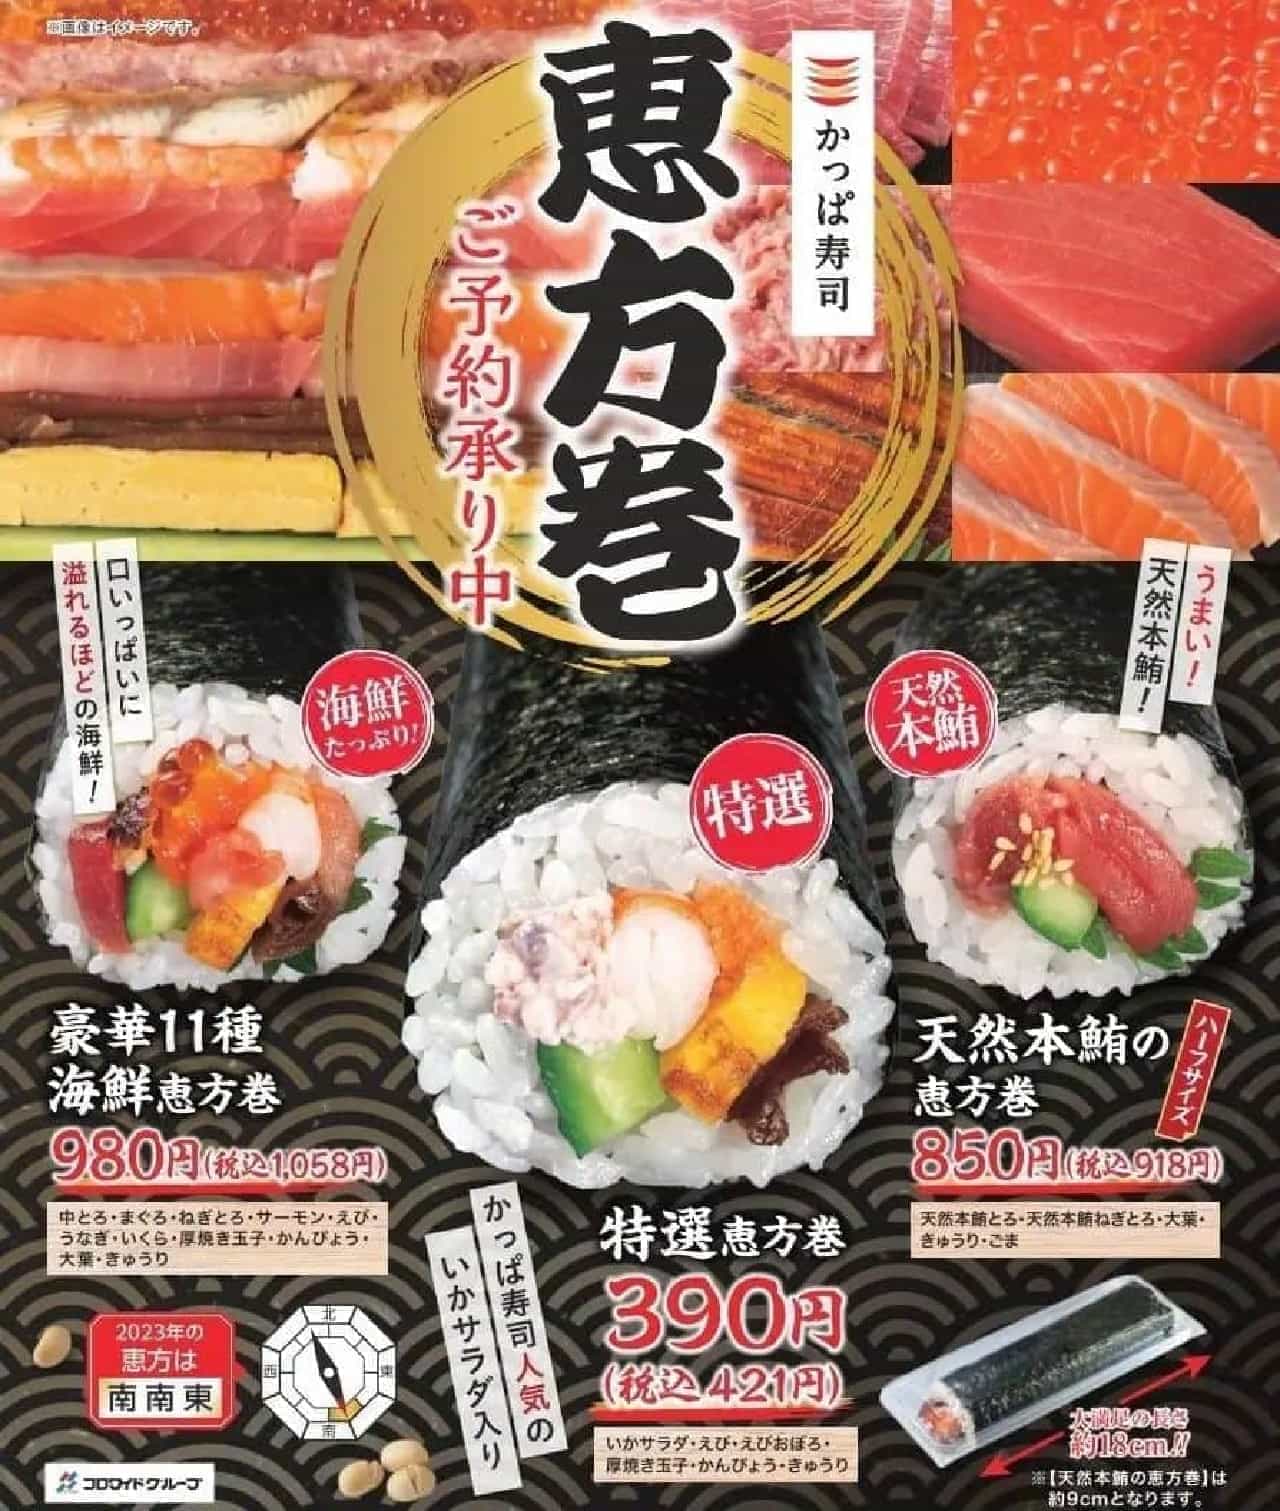 Kappa Sushi "Tokusen Ebomaki", "Natural Tuna Ebomaki", "Gorgeous 11 Kinds of Seafood Ebomaki".